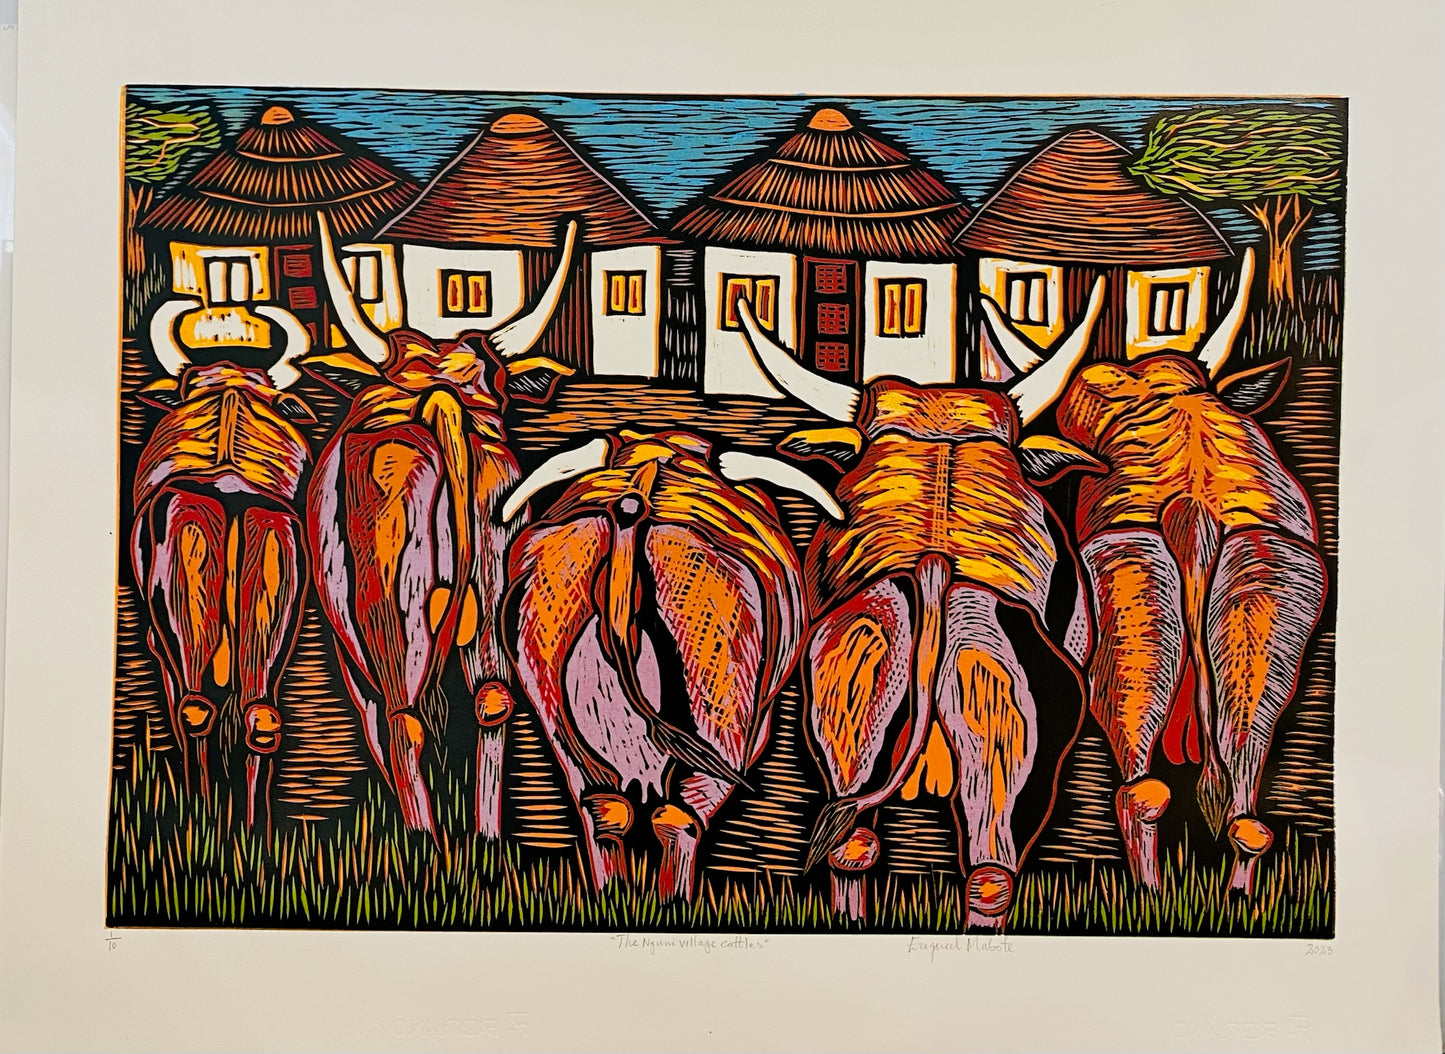 The Nguni Village Cattles